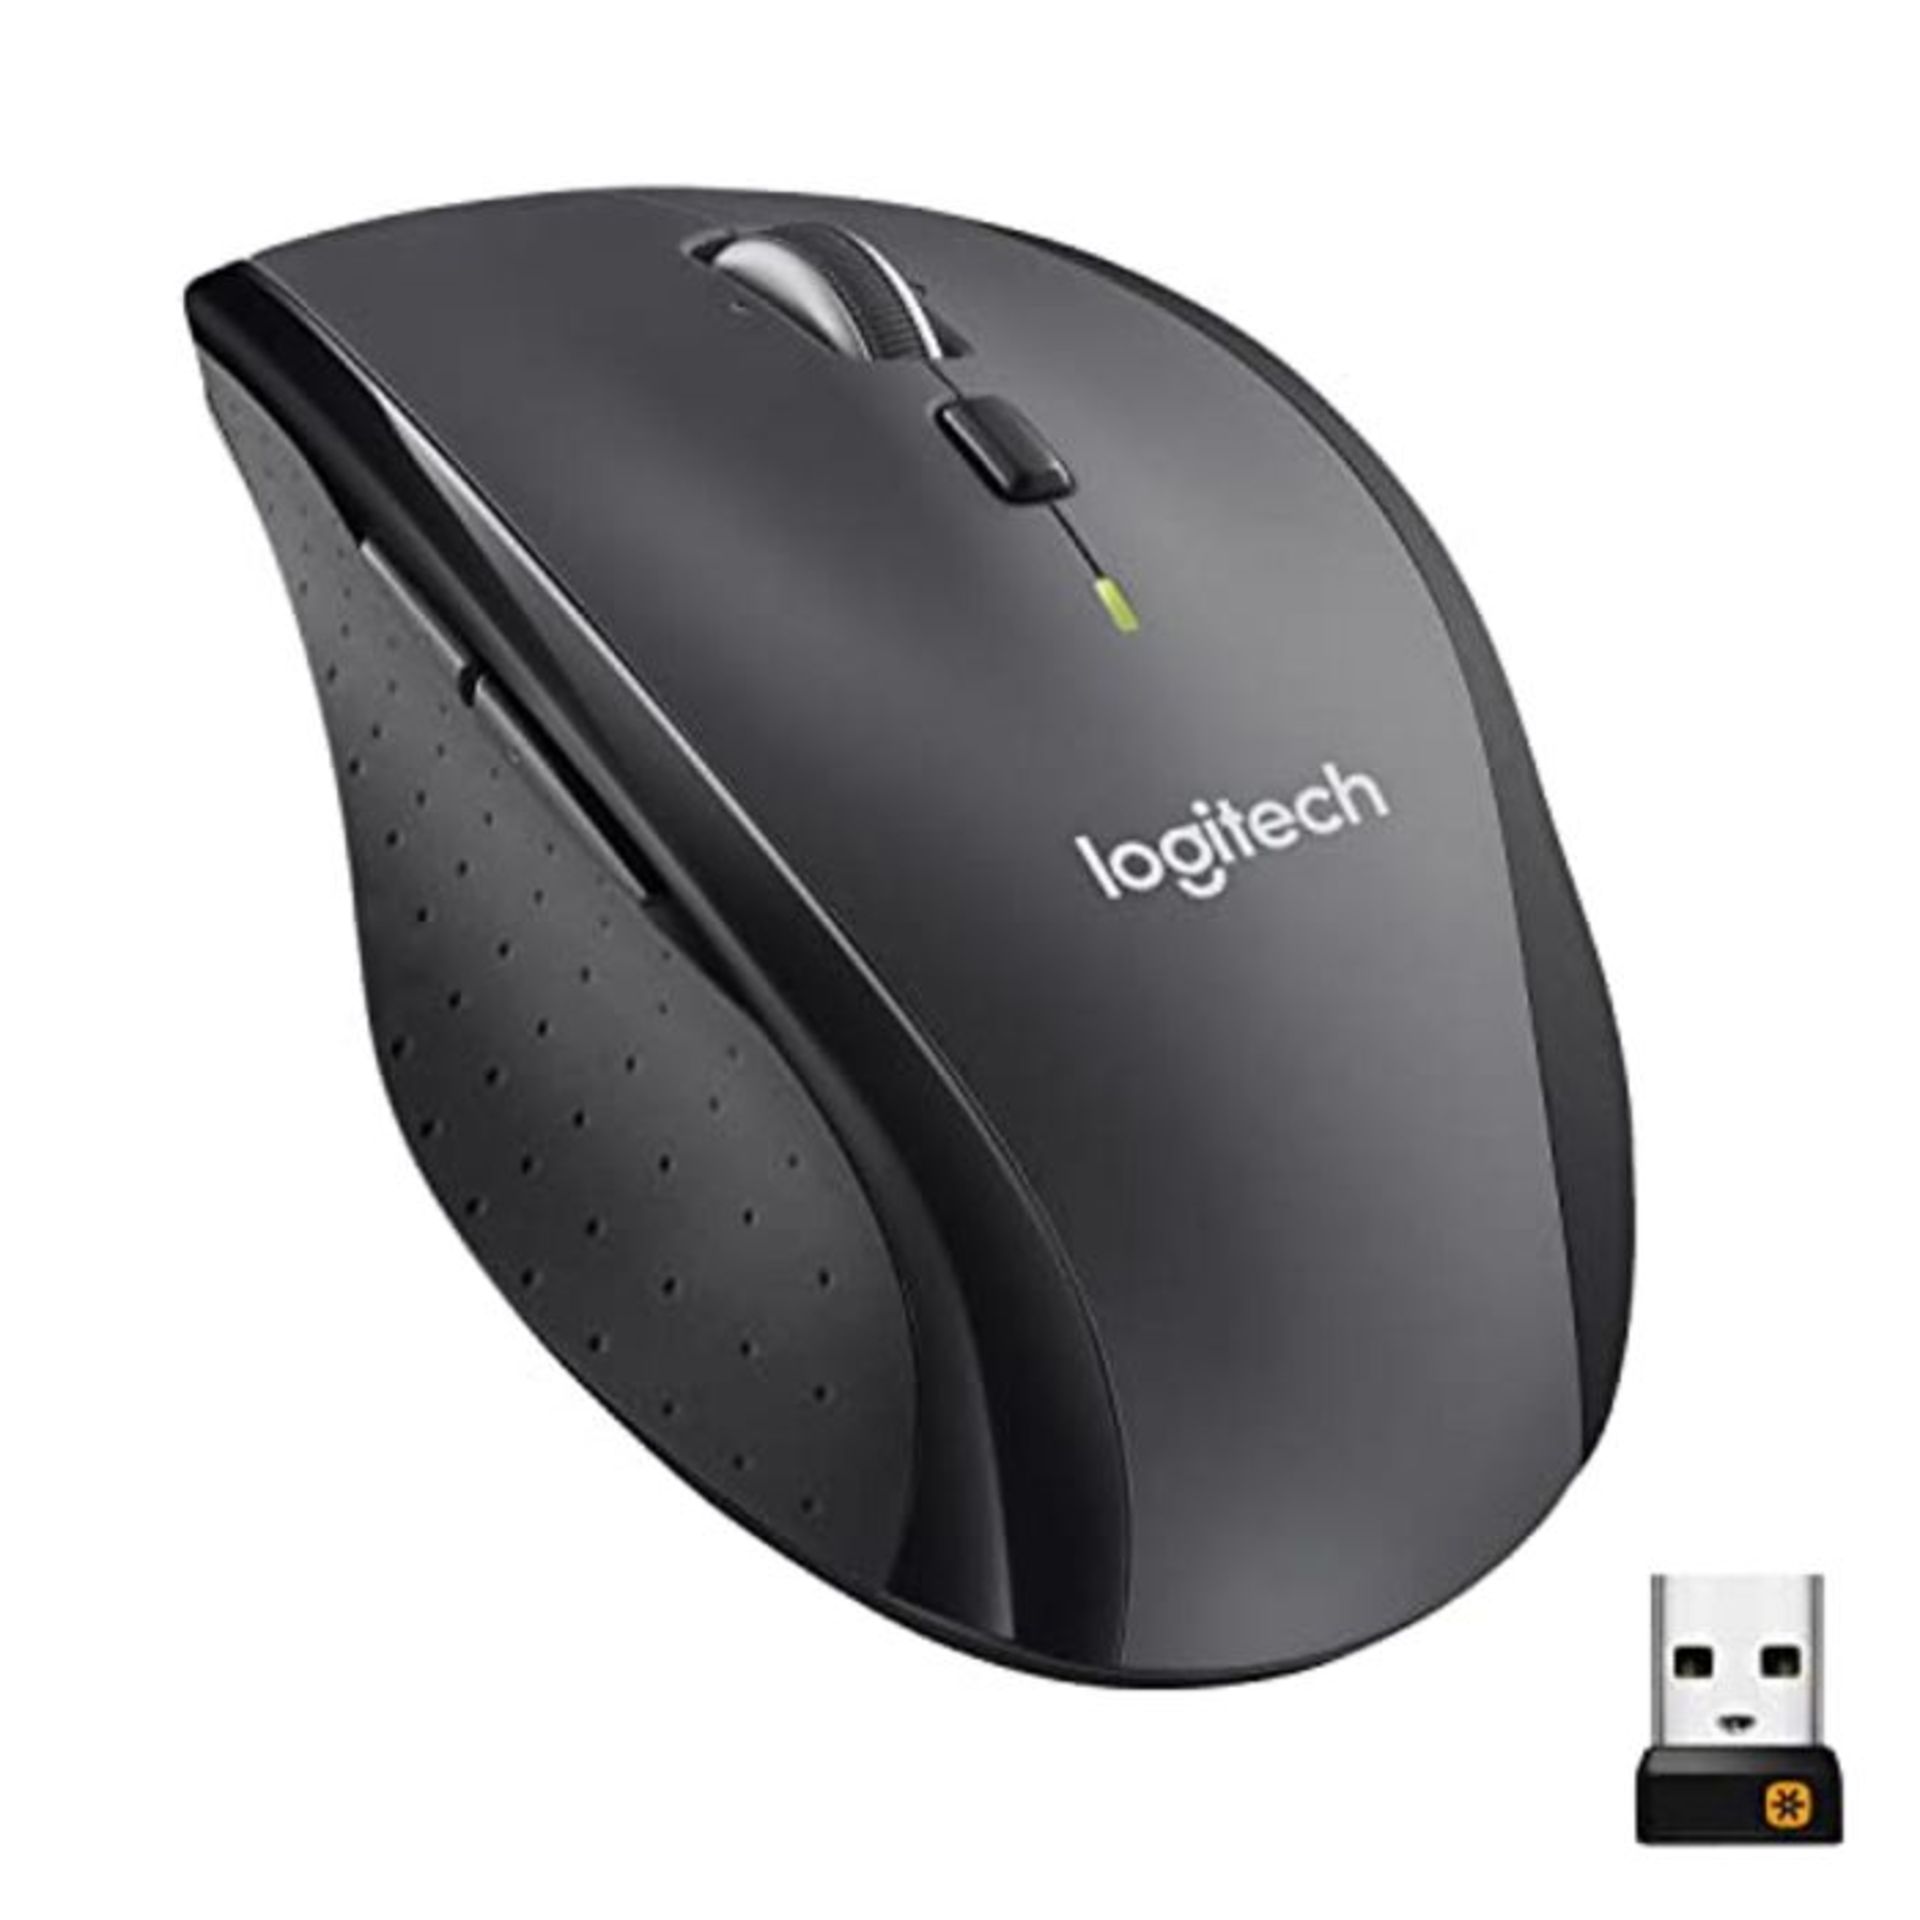 Logitech M705 Marathon Wireless Mouse, 2.4 GHz with USB Unifying Mini-Receiver, 1000 D